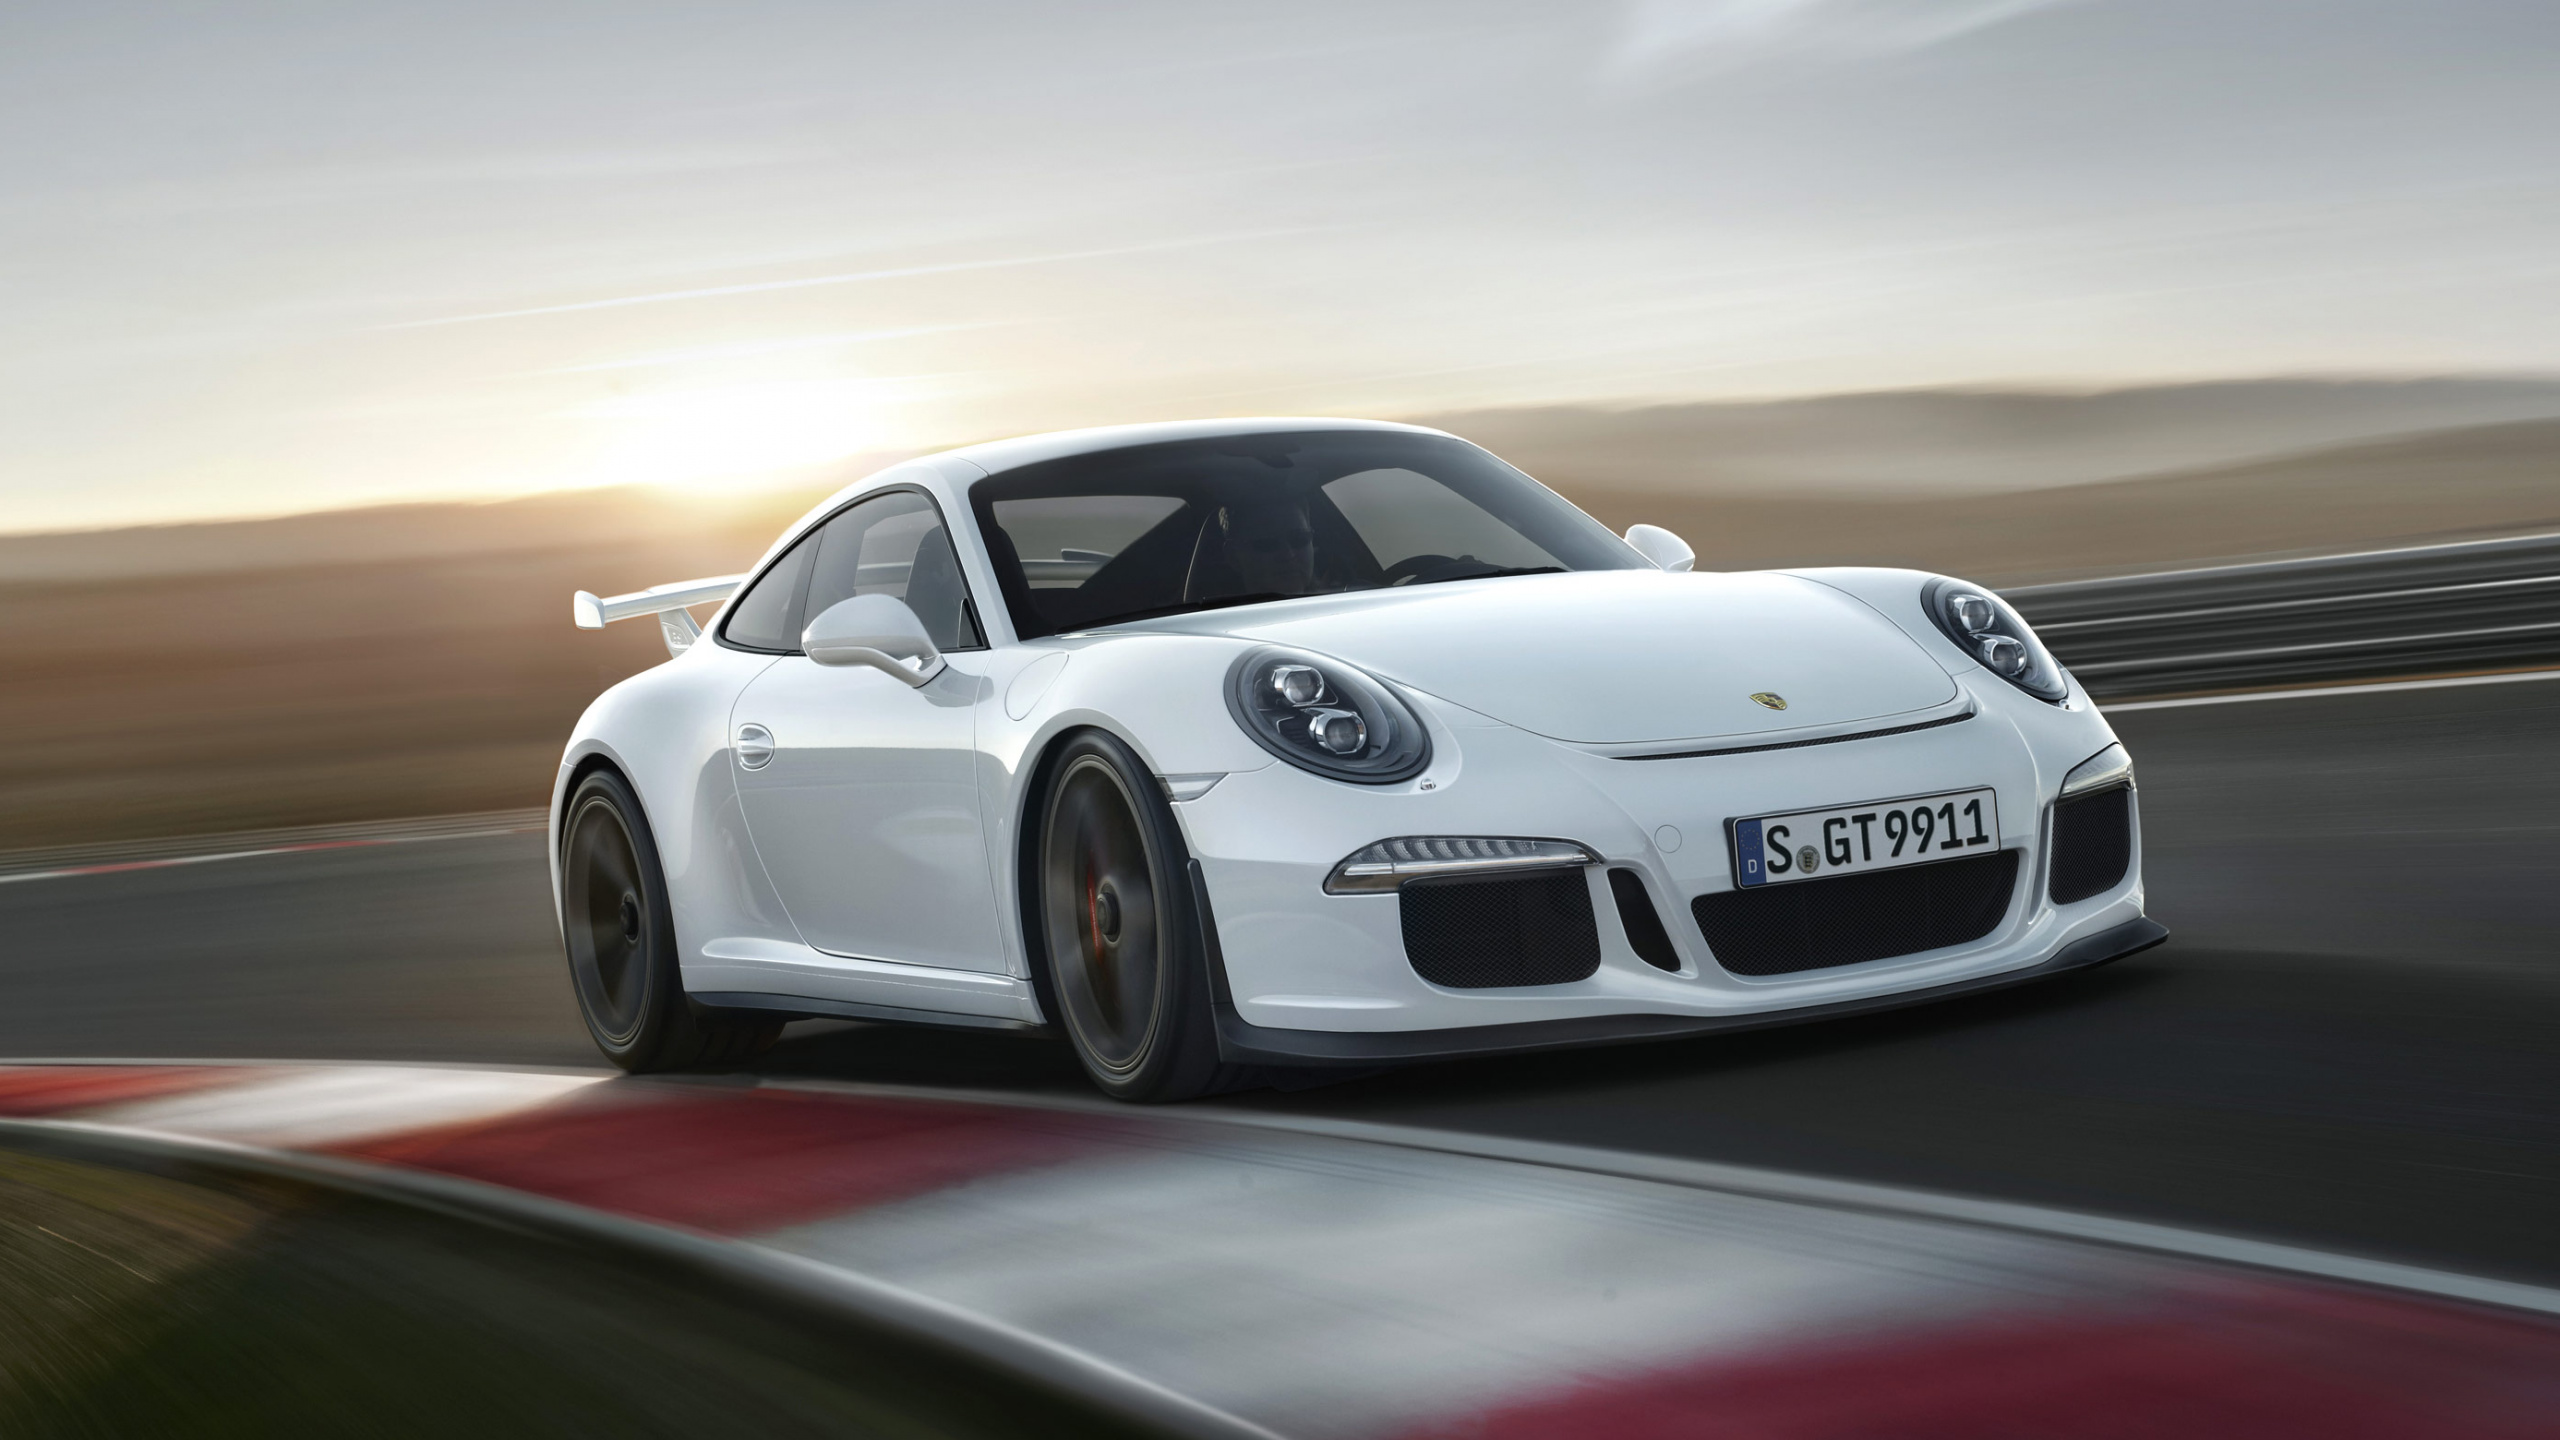 Porsche 911 Blanco en la Carretera. Wallpaper in 2560x1440 Resolution